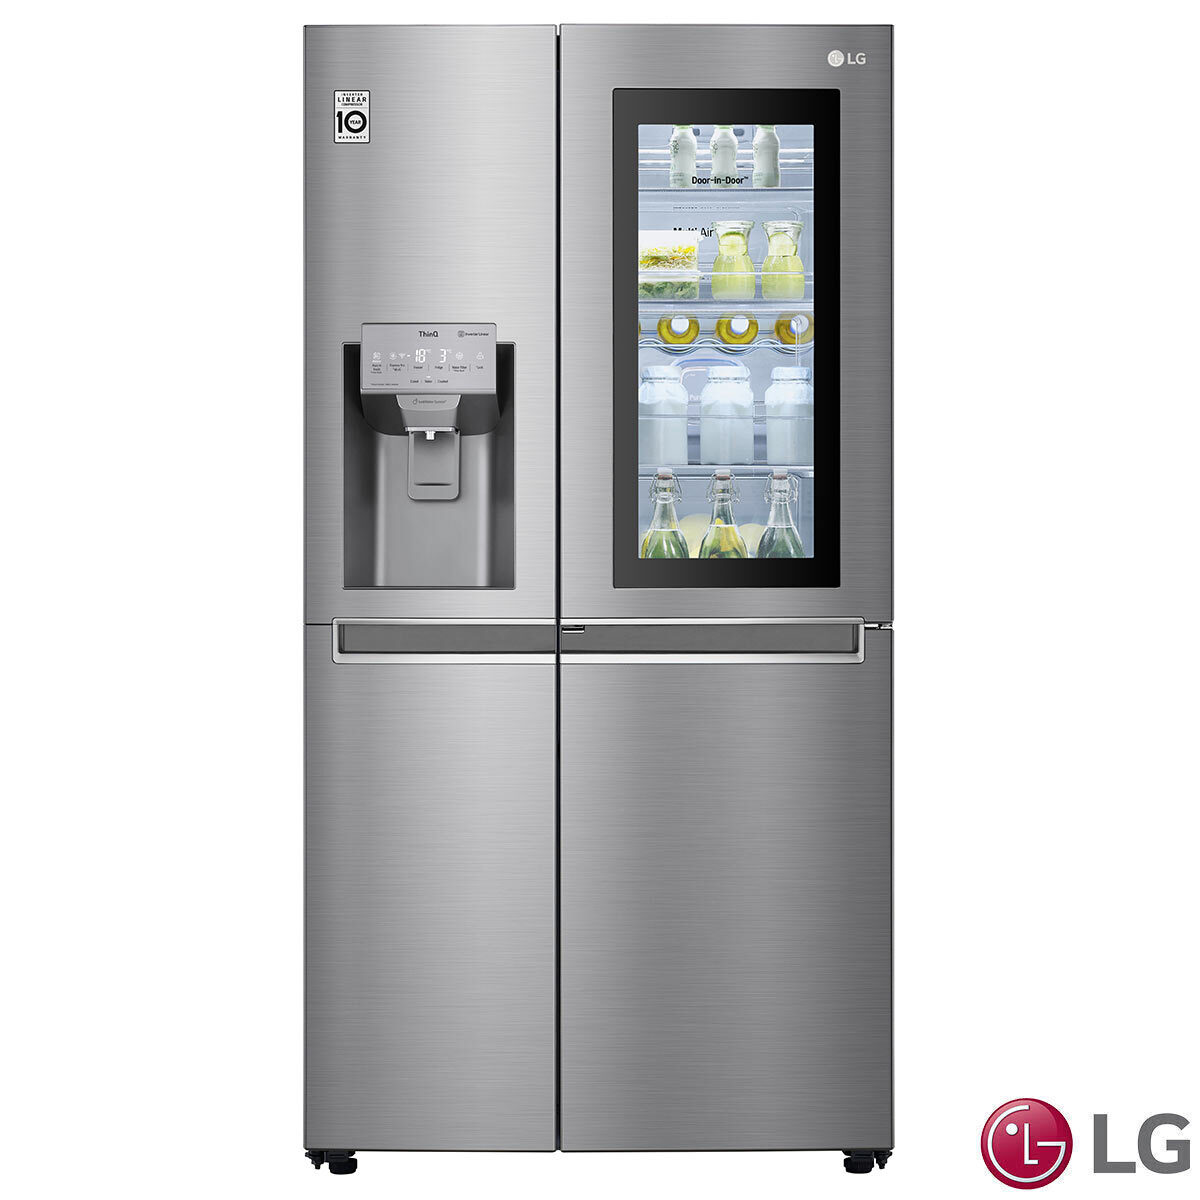 16+ Costco lg american fridge freezer ideas in 2021 